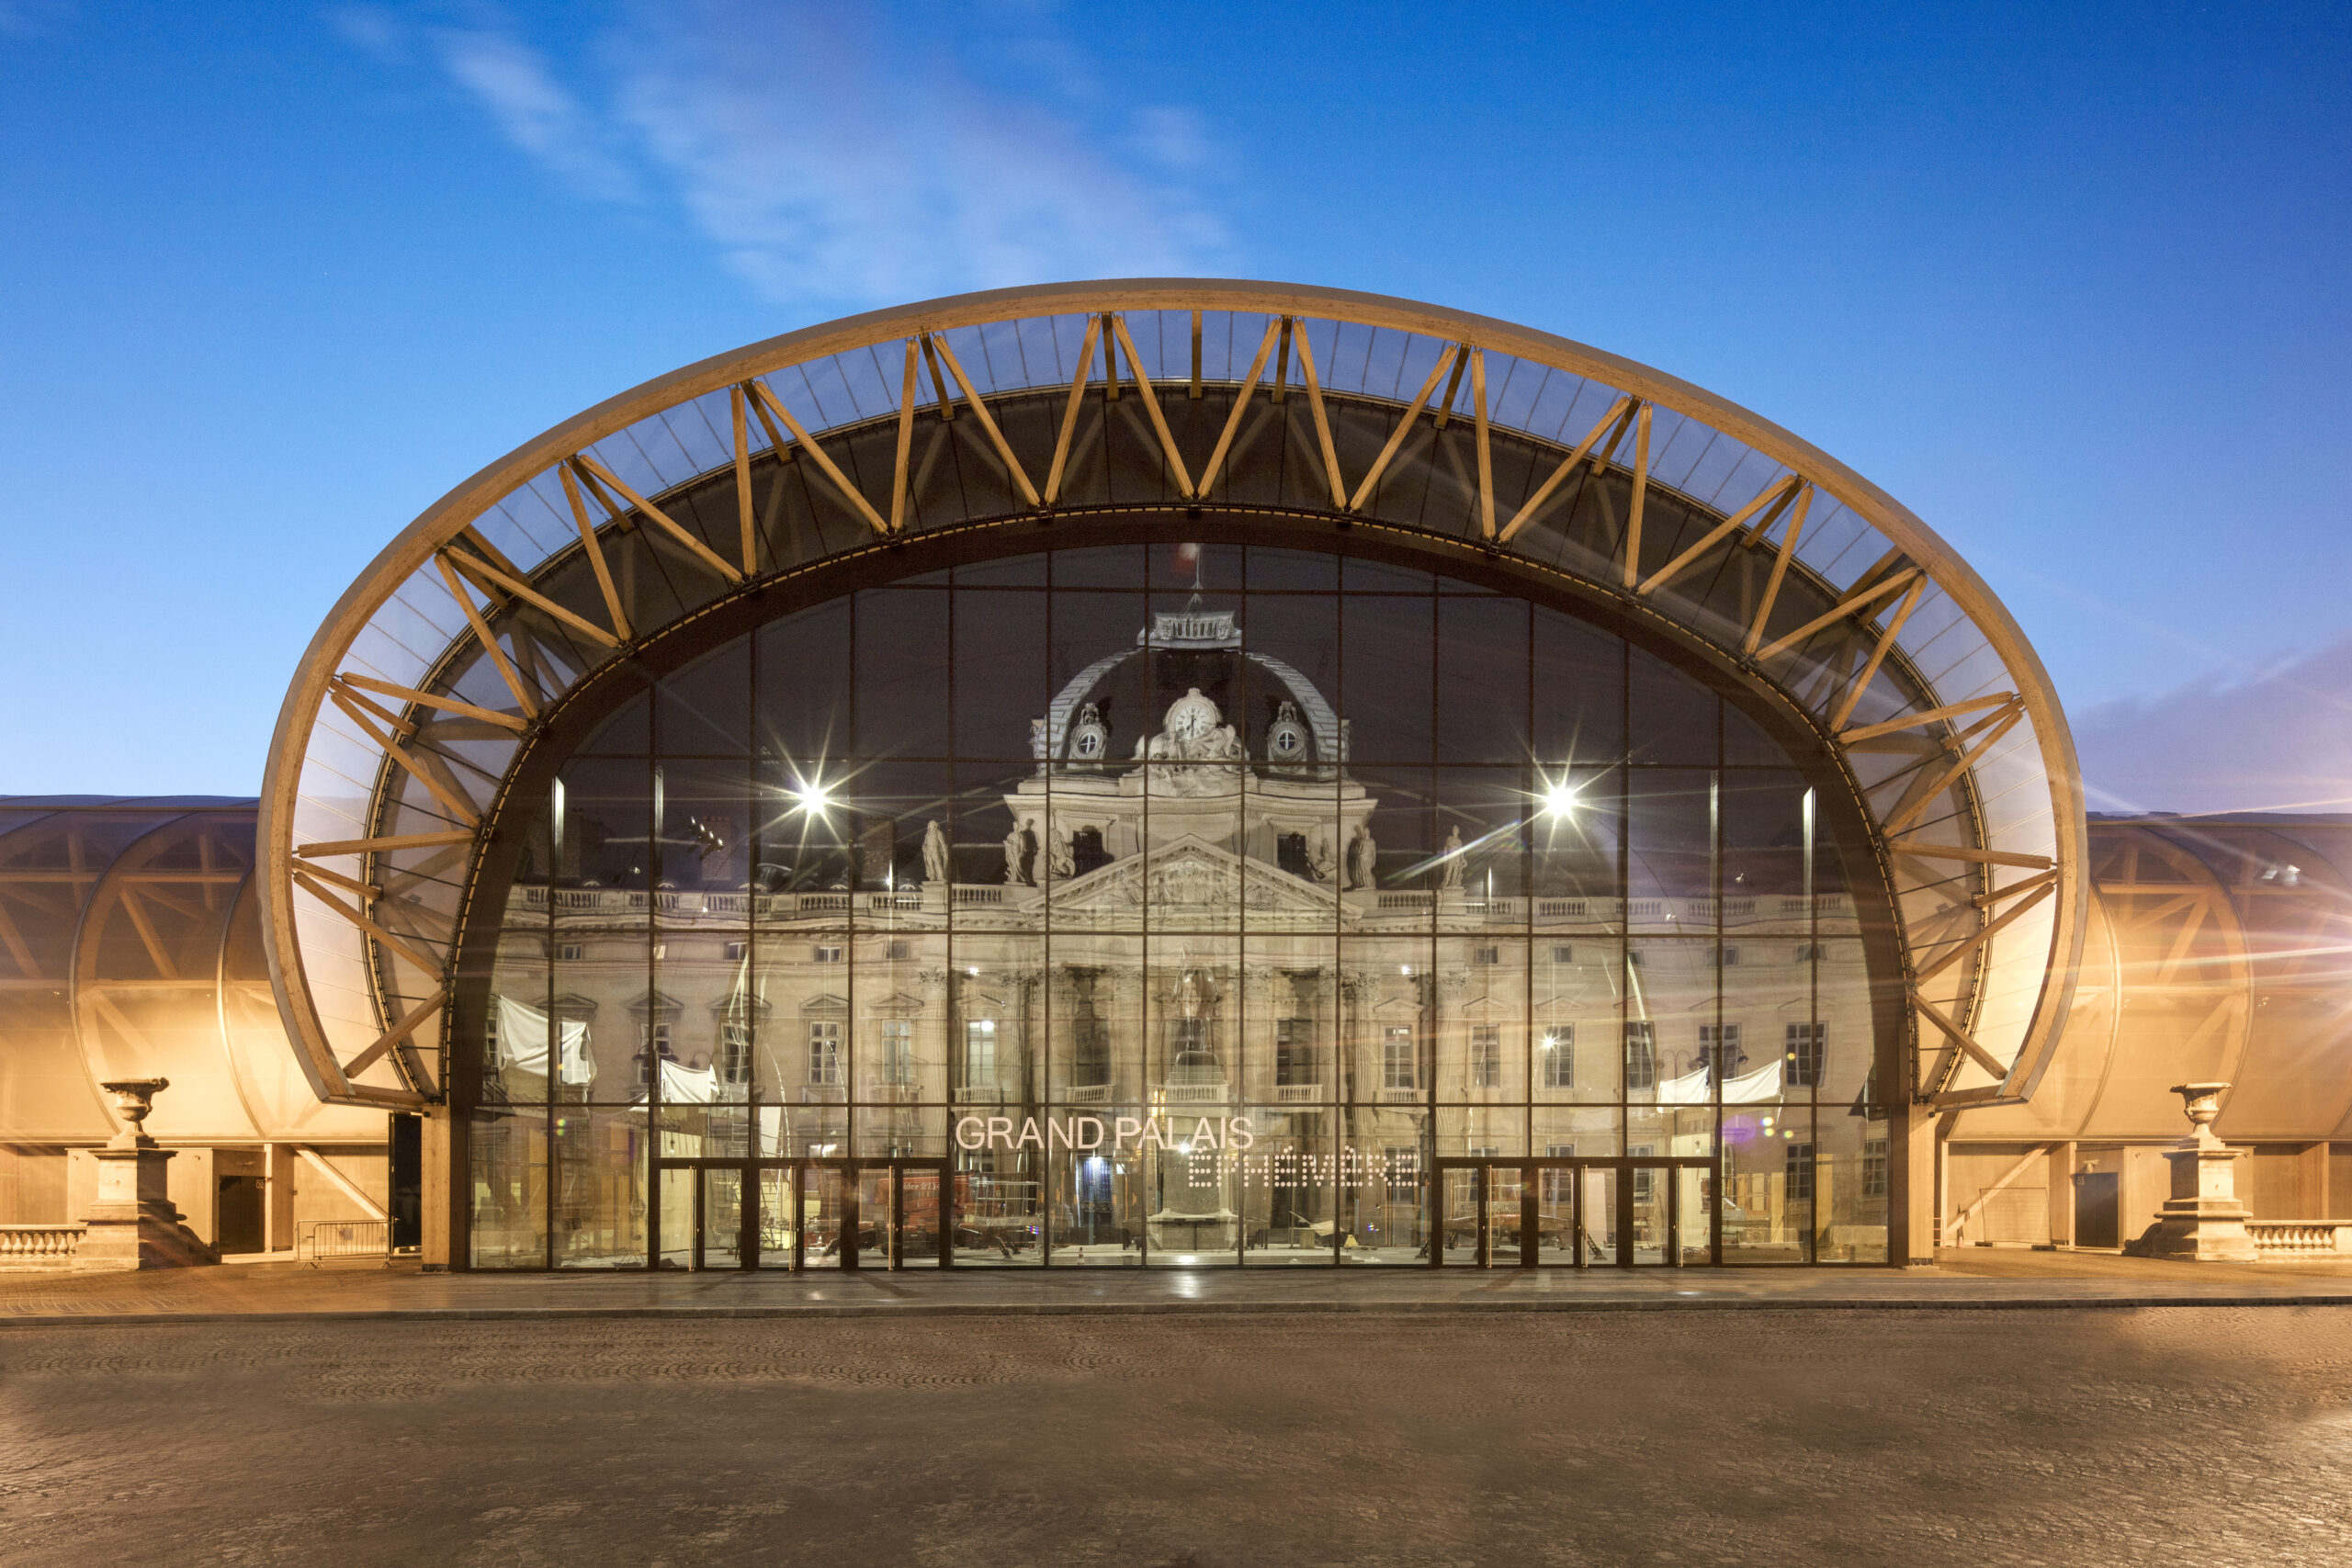 Le Grand Palais phmre.
Champs de mars, Paris.
28/04/2021
Wilmotte & associs architectes 

@Patrick Tourneboeuf/RMN_GP/Tendance Floue